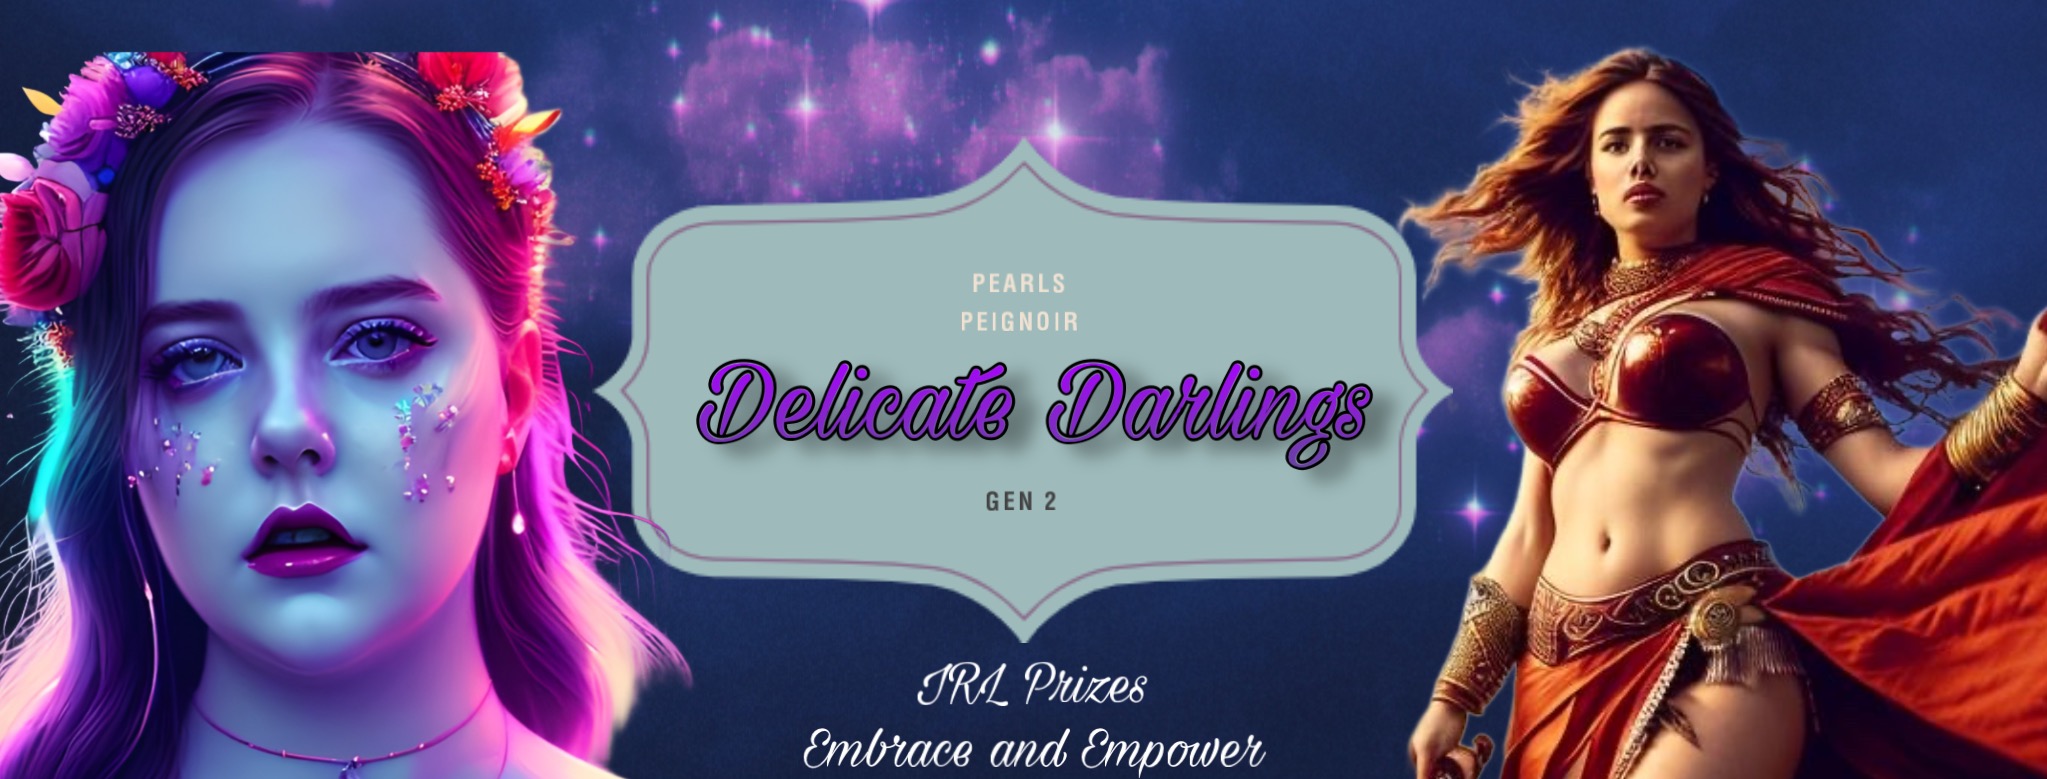 delicatedarlings banner